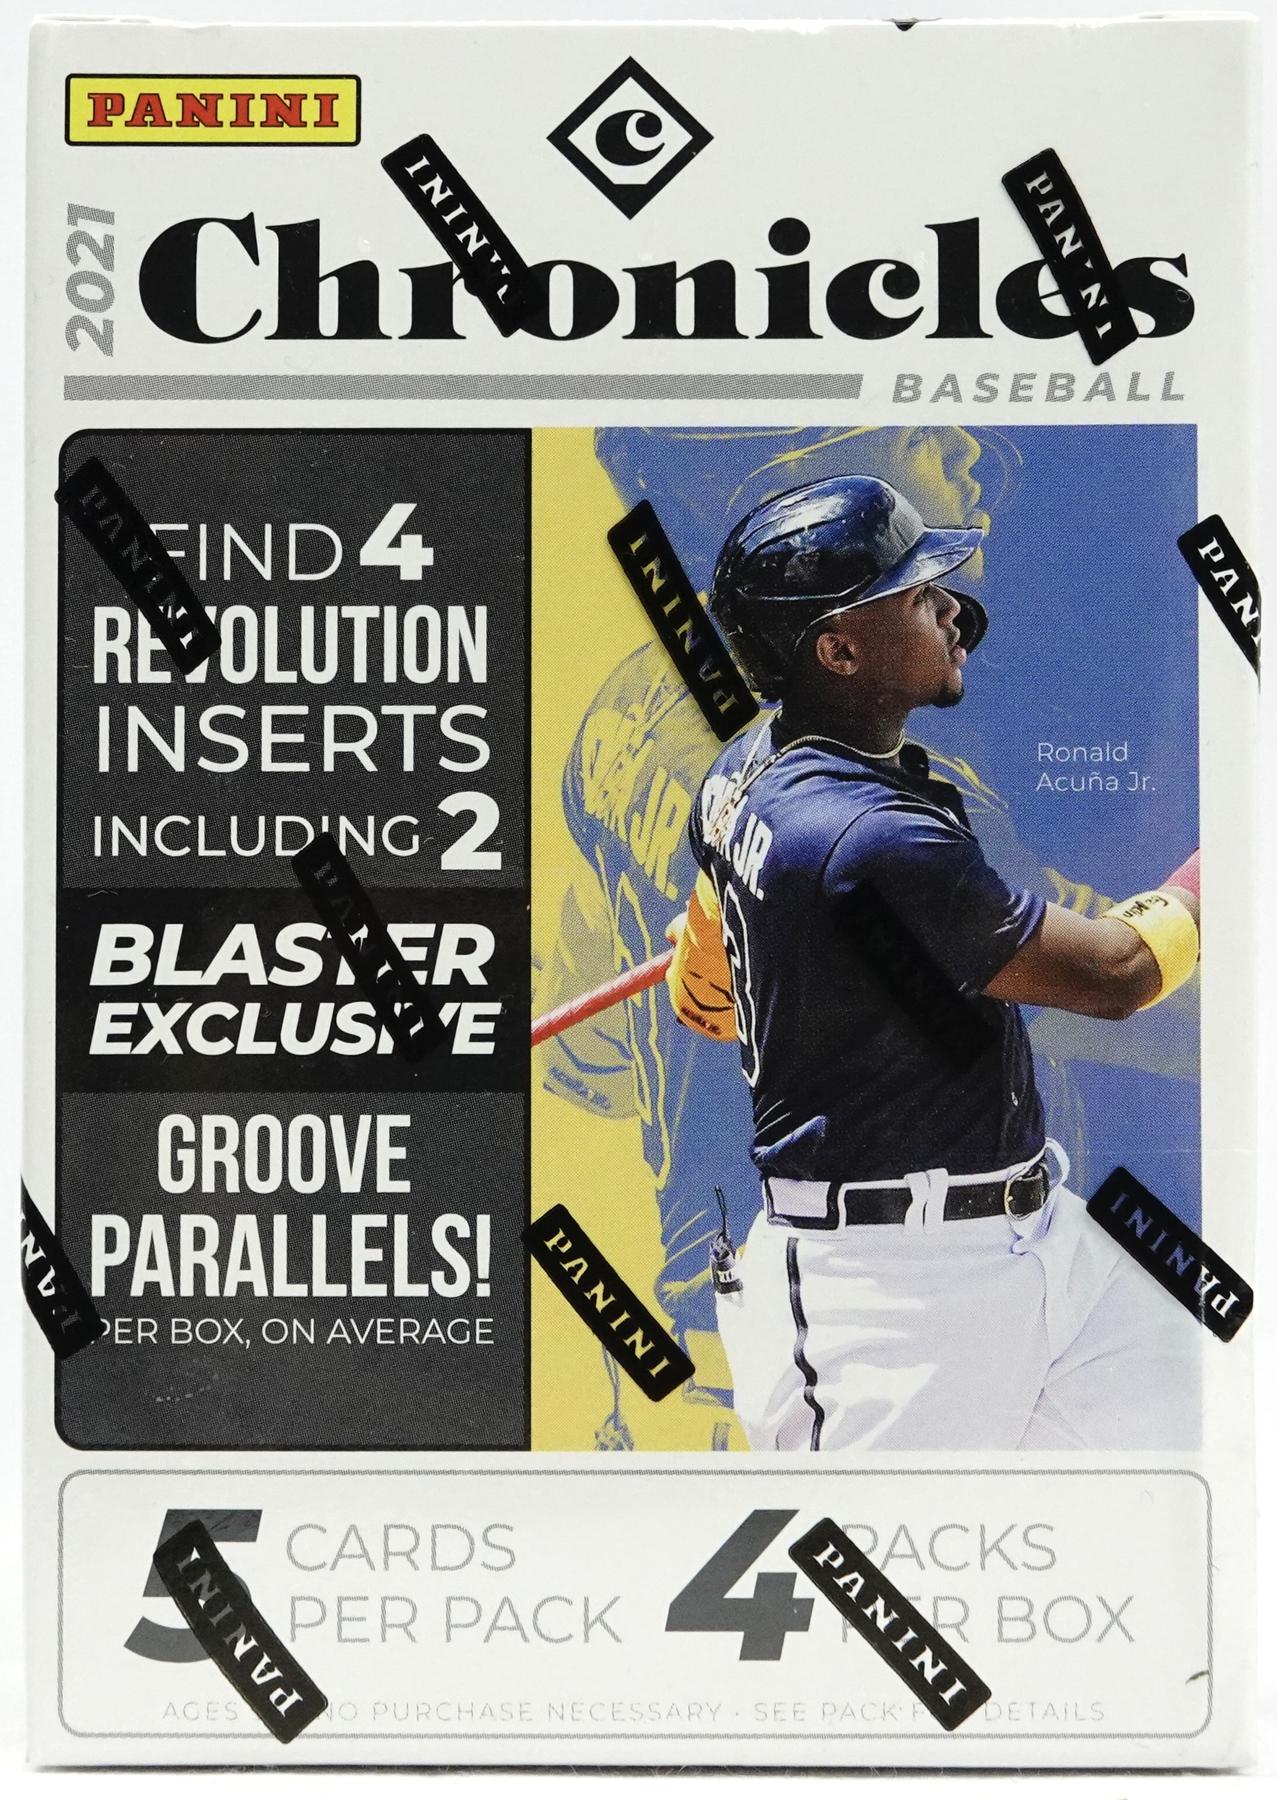 2021 Panini Chronicles Baseball HOBBY box 6 pks/bx